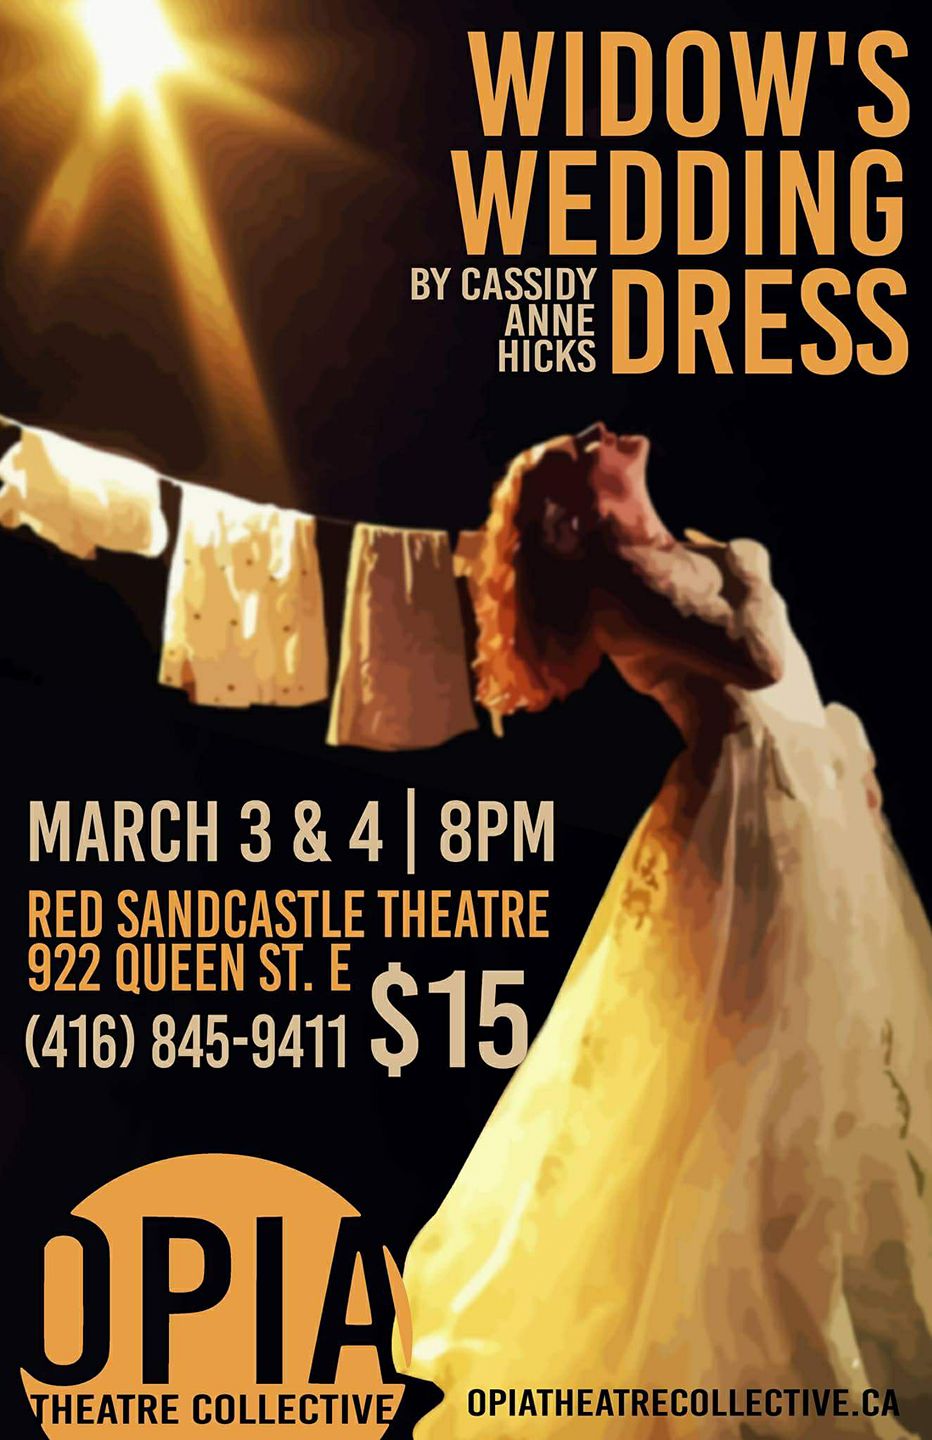 OPIA Theatre Collective Presents: Widow’s Wedding Dress - image